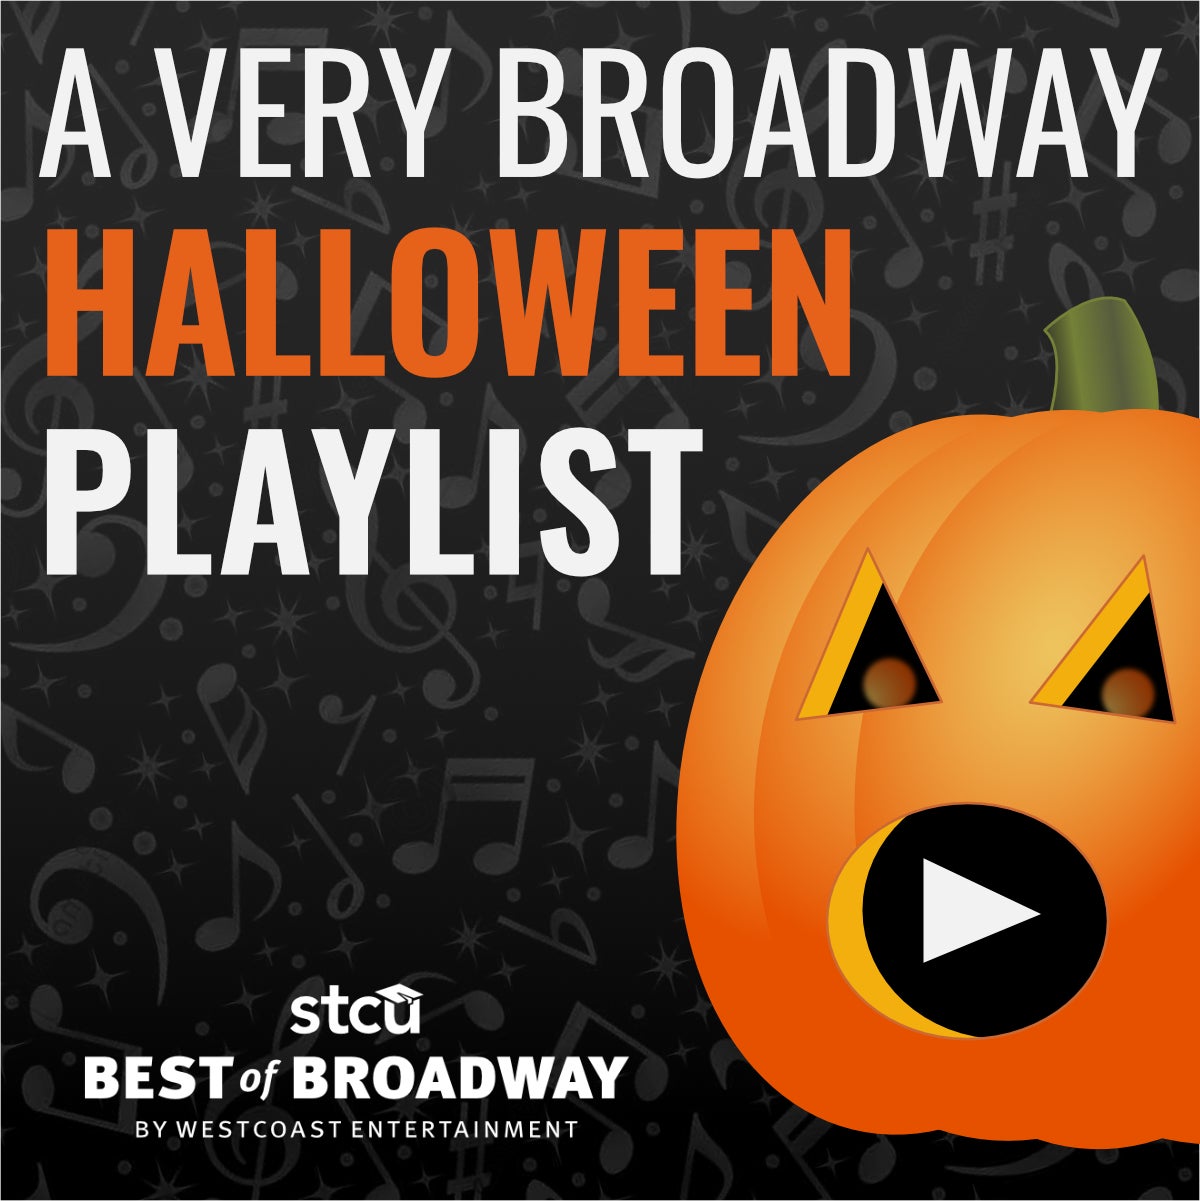 A Very Broadway Halloween Playlist